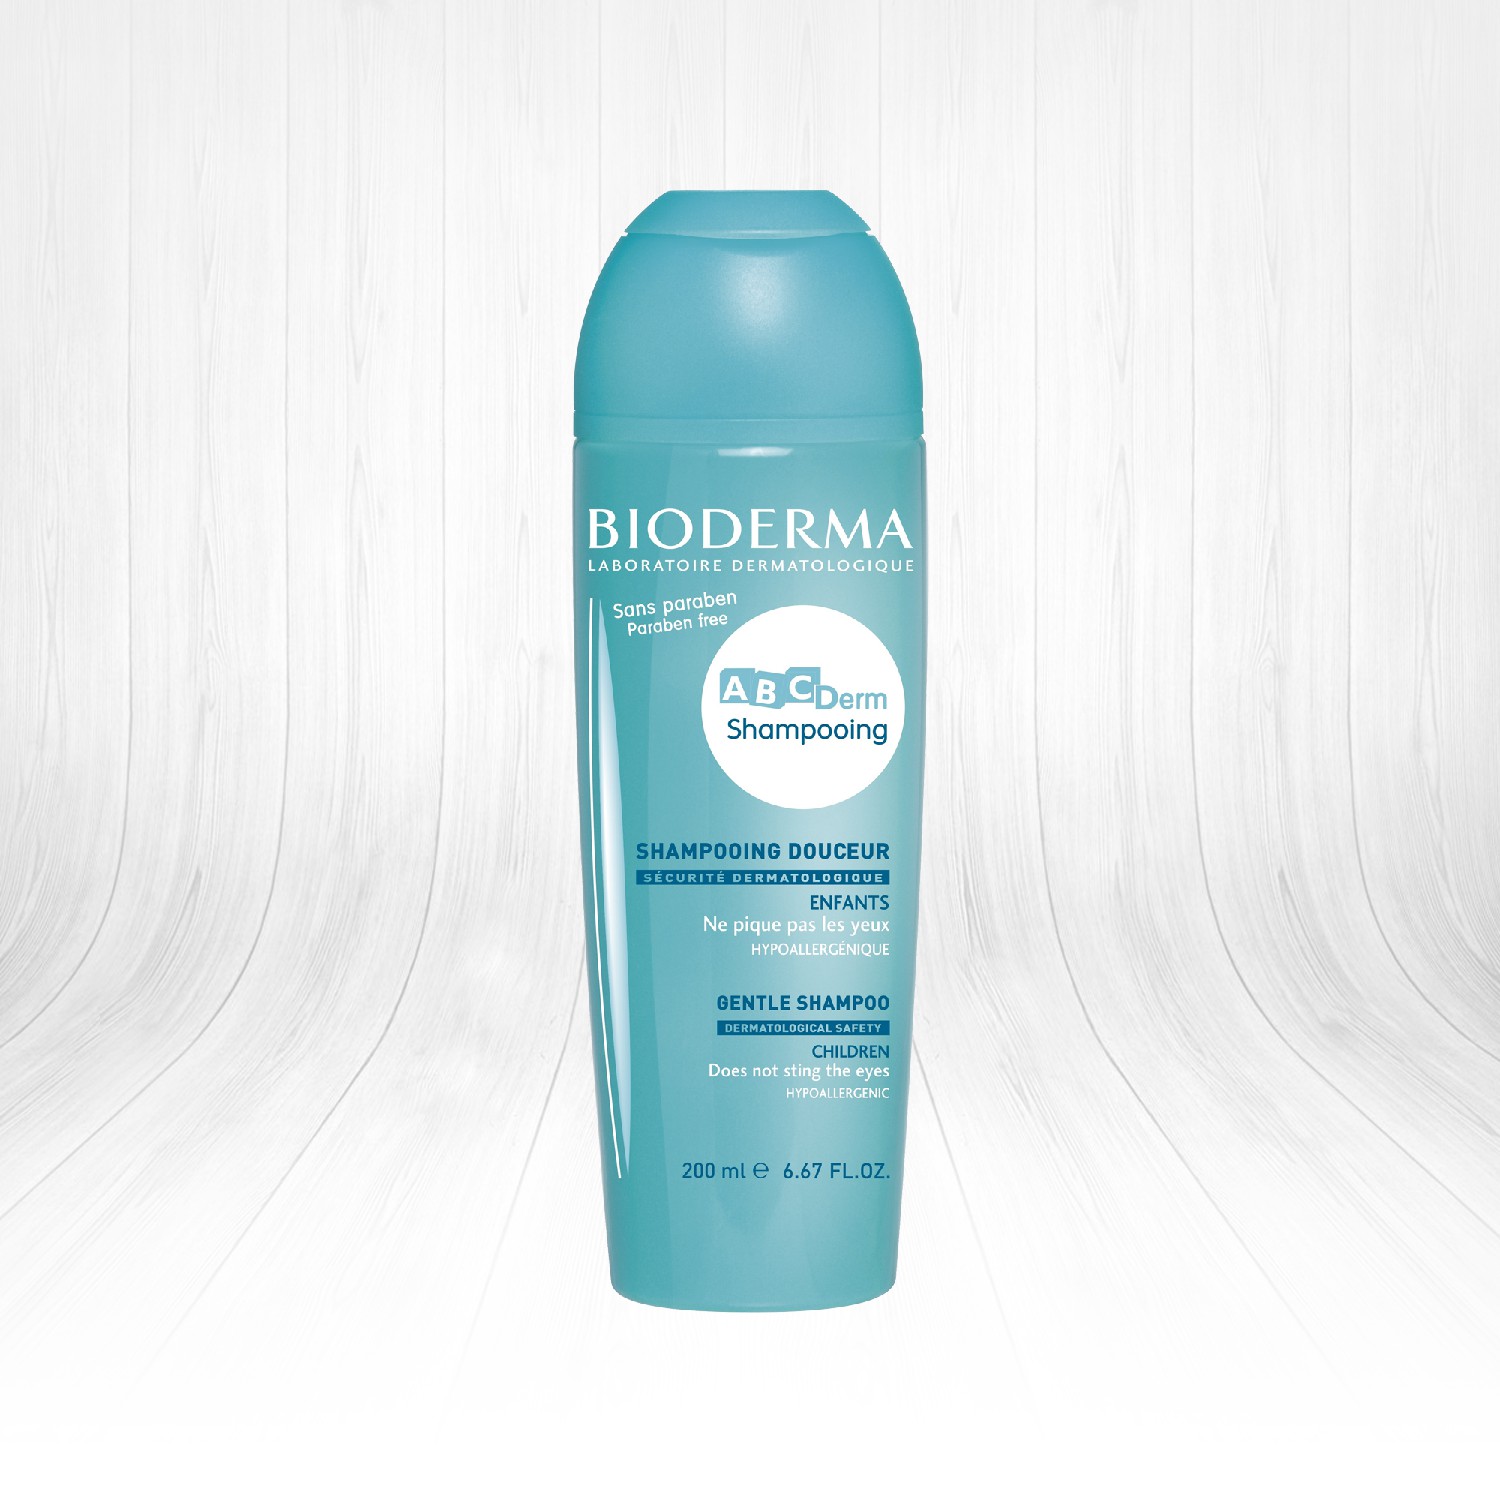 Bioderma ABC Derm Gentle Shampoo